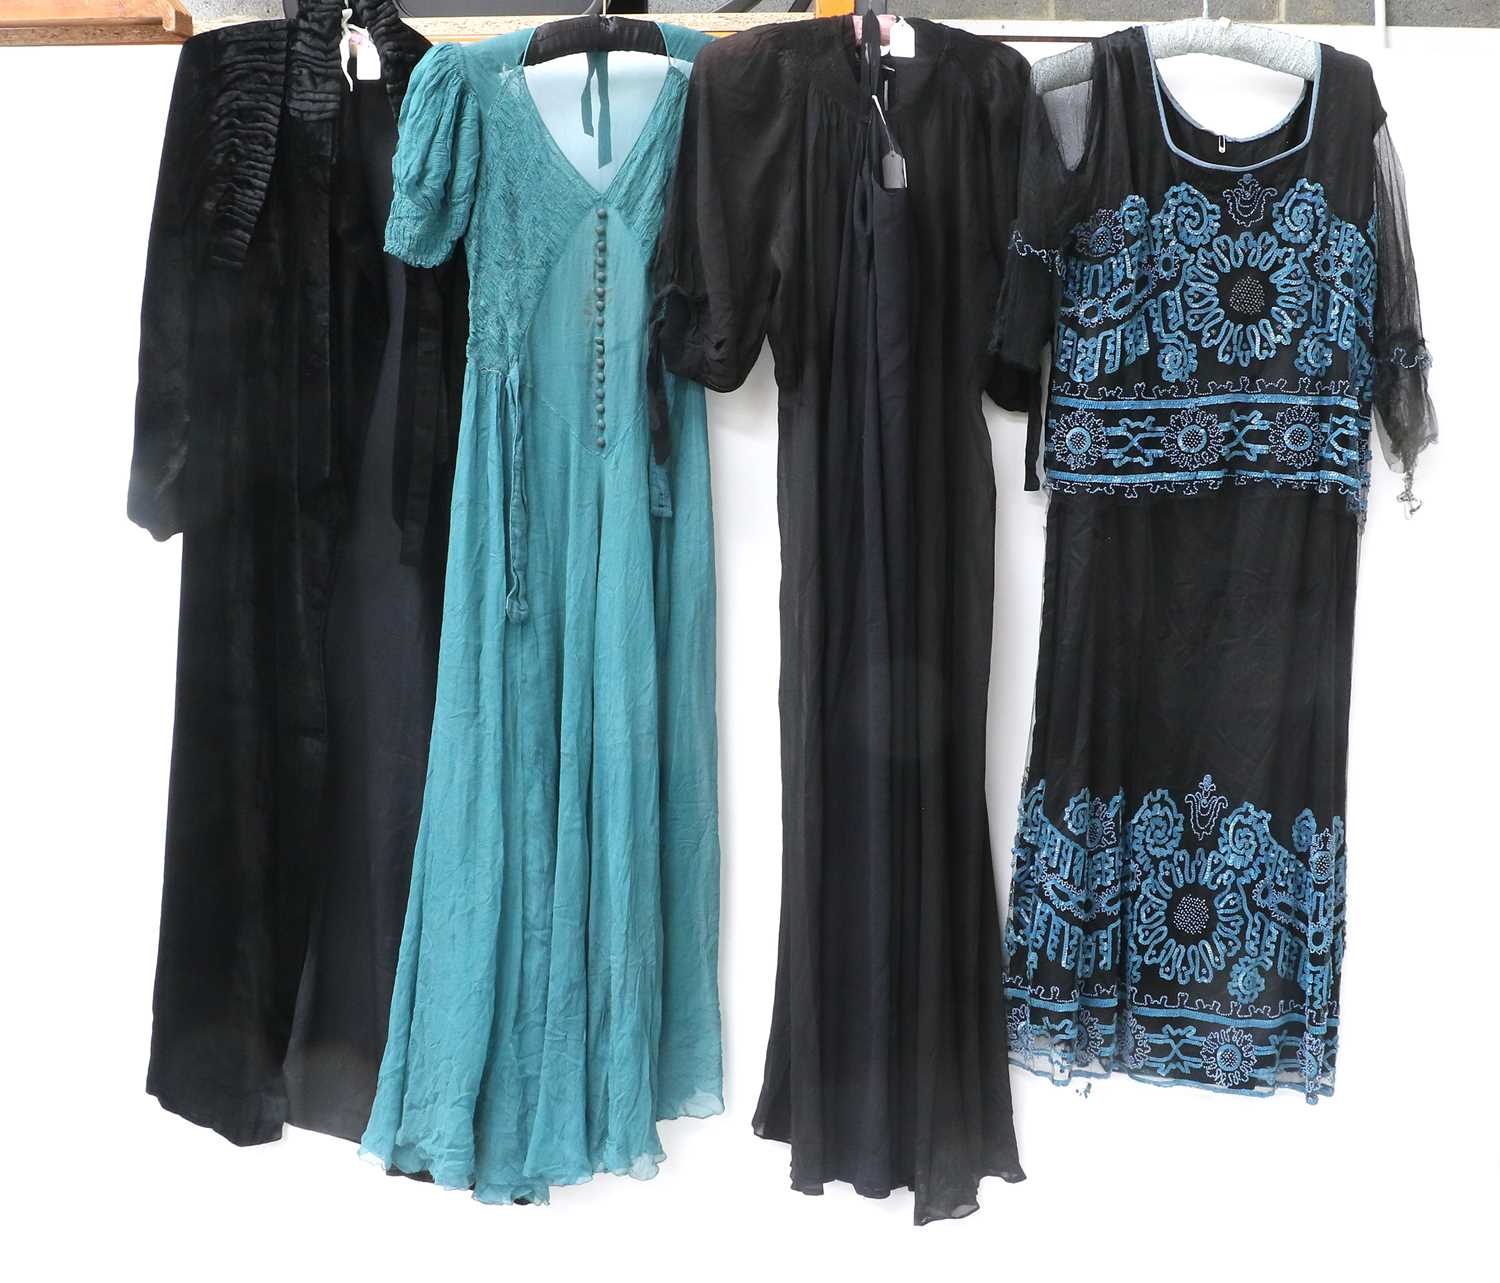 Circa 1920s Ladies Evening Dresses comprising a black silk dress with black net mount, blue sequin